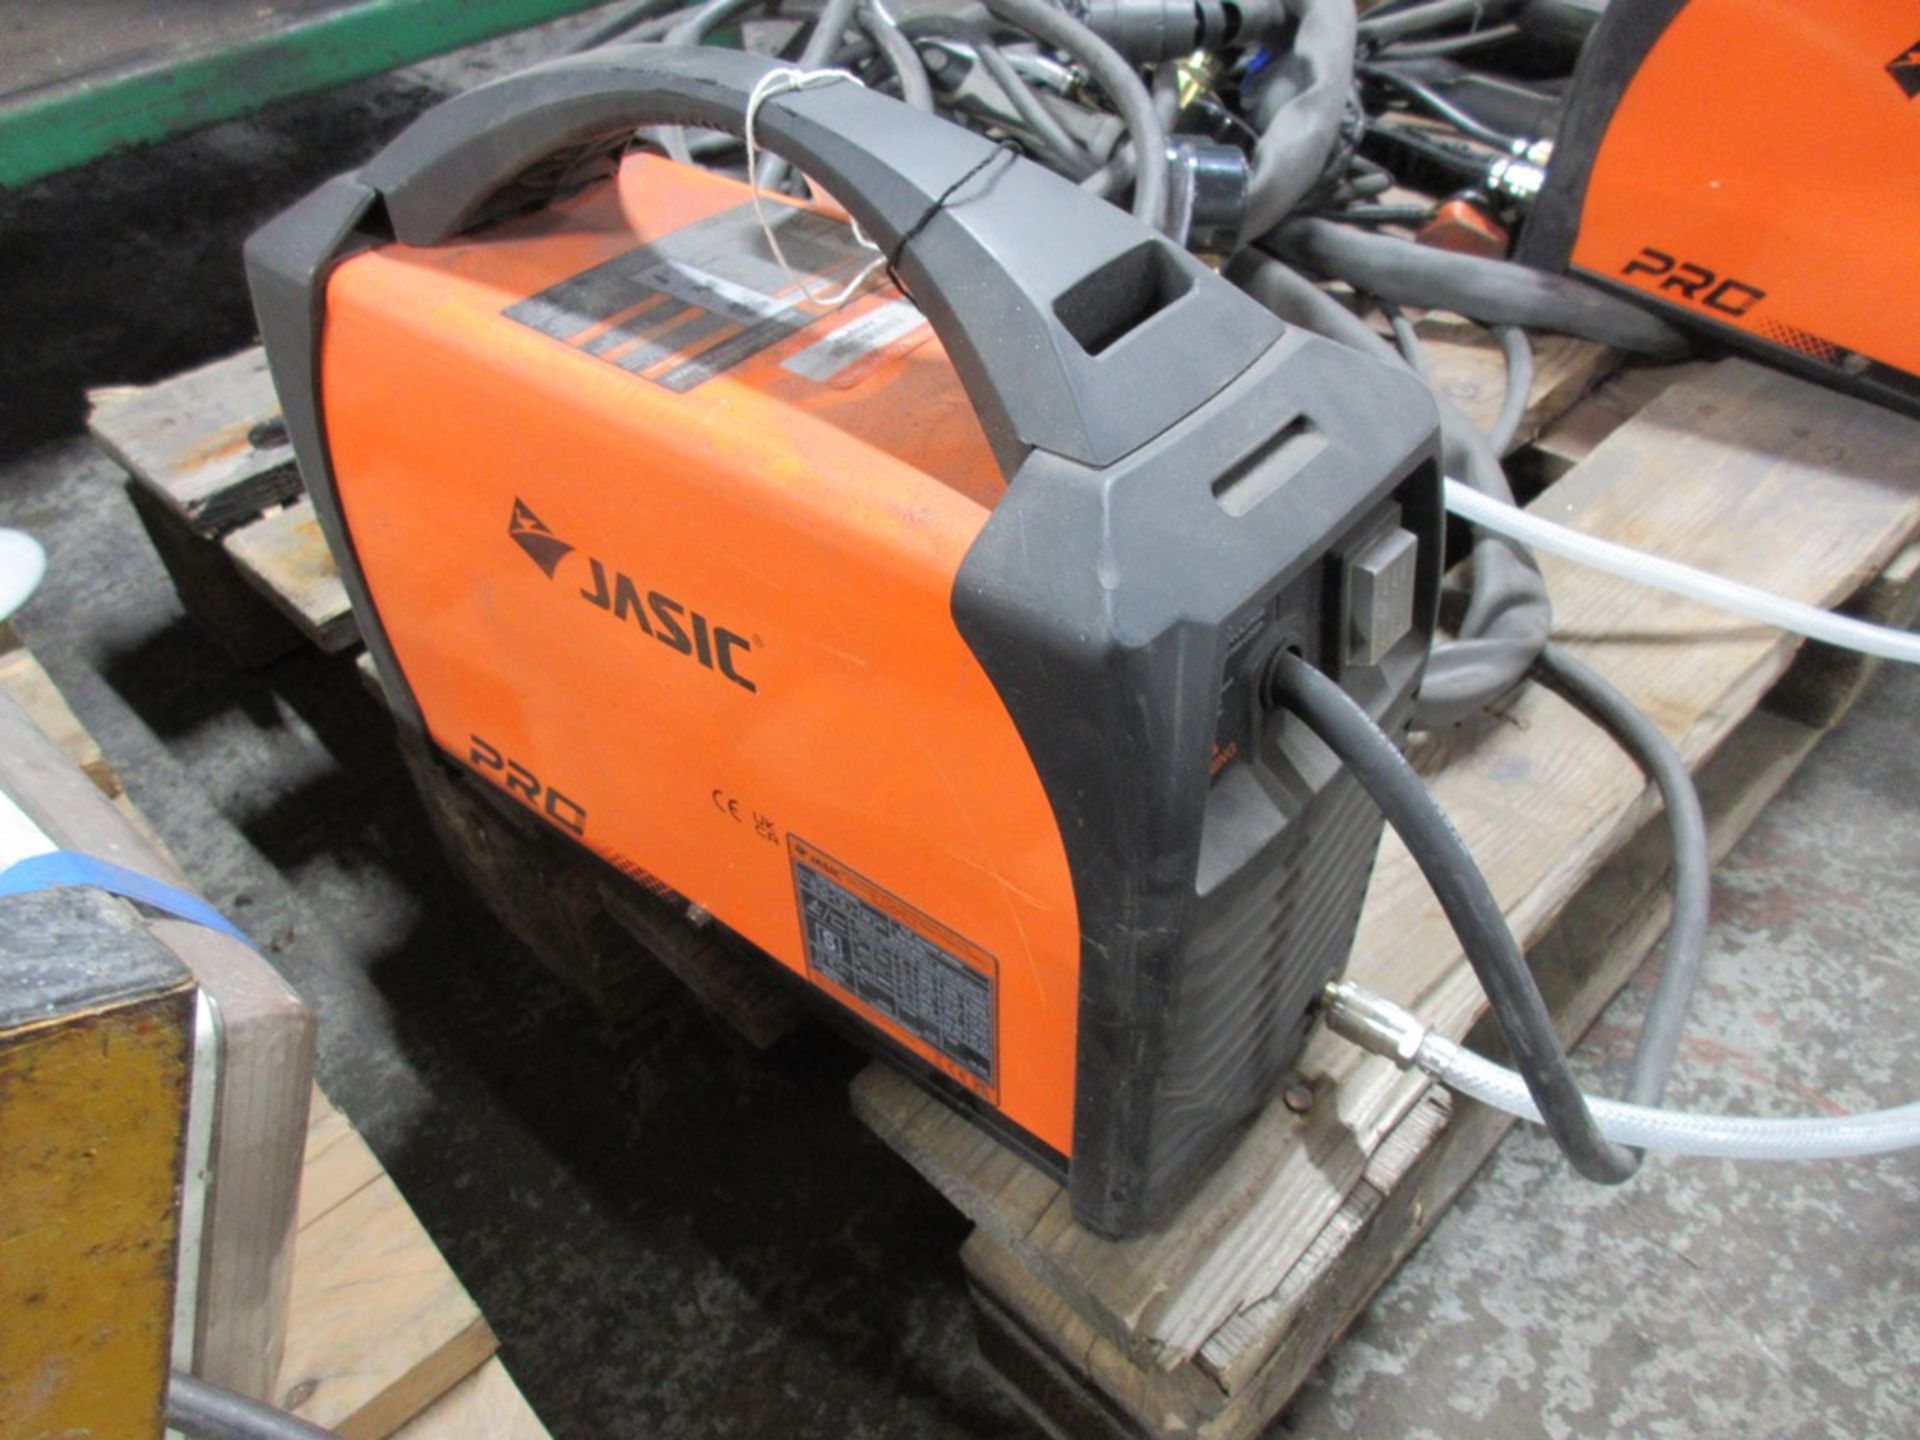 Jasic Pro 180 amp tig welding set, serial no. ENIEC60974-1